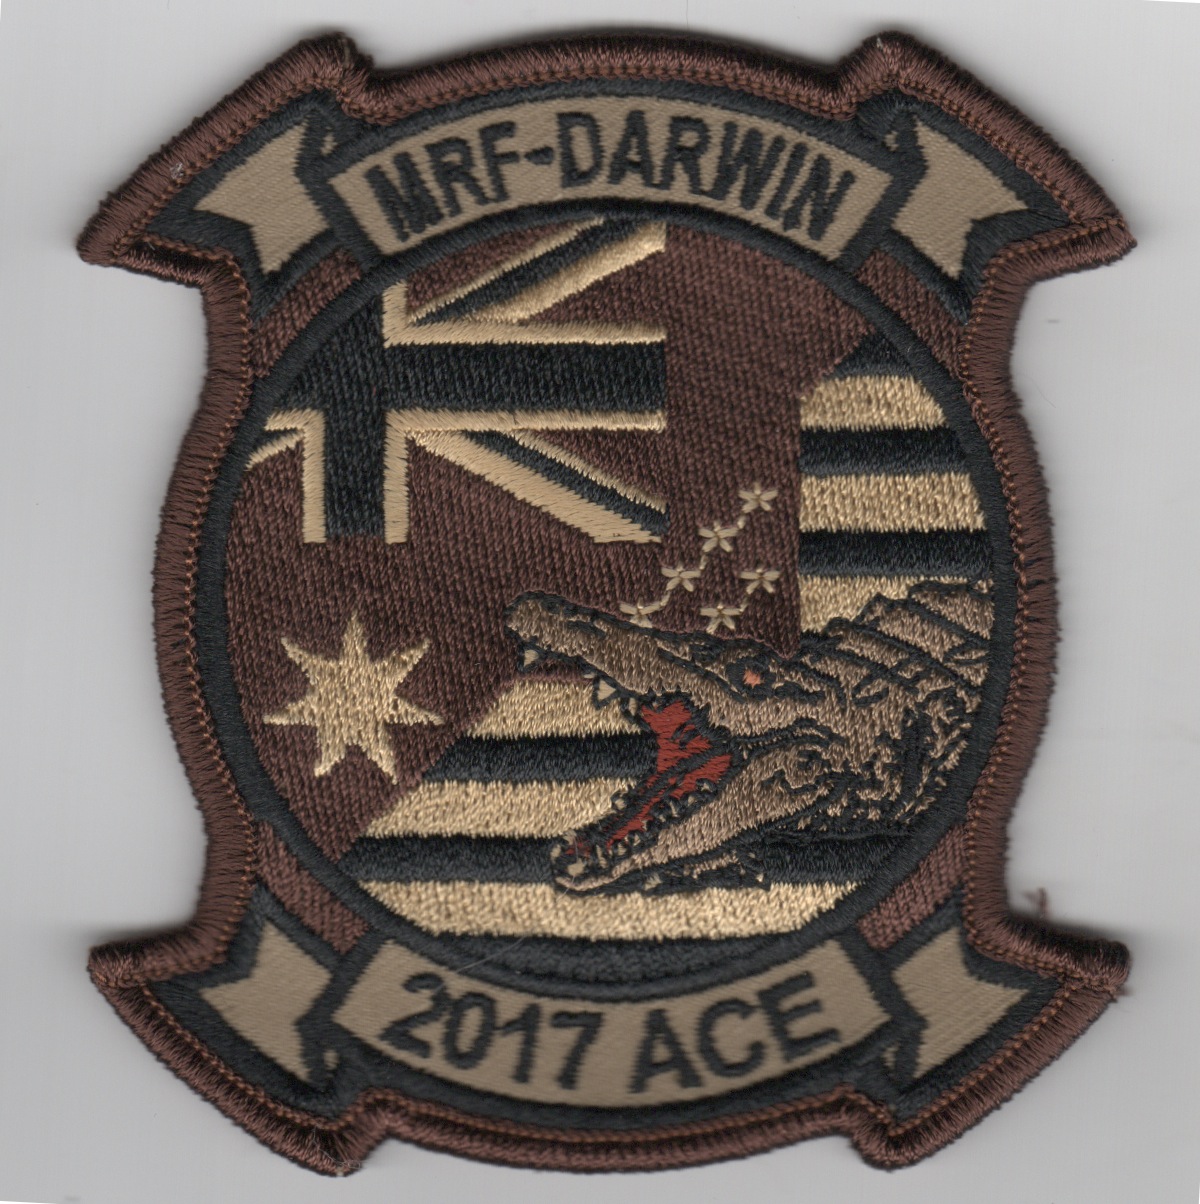 HMLA-367 'MRF-DARWIN' Patch (Des Flag)